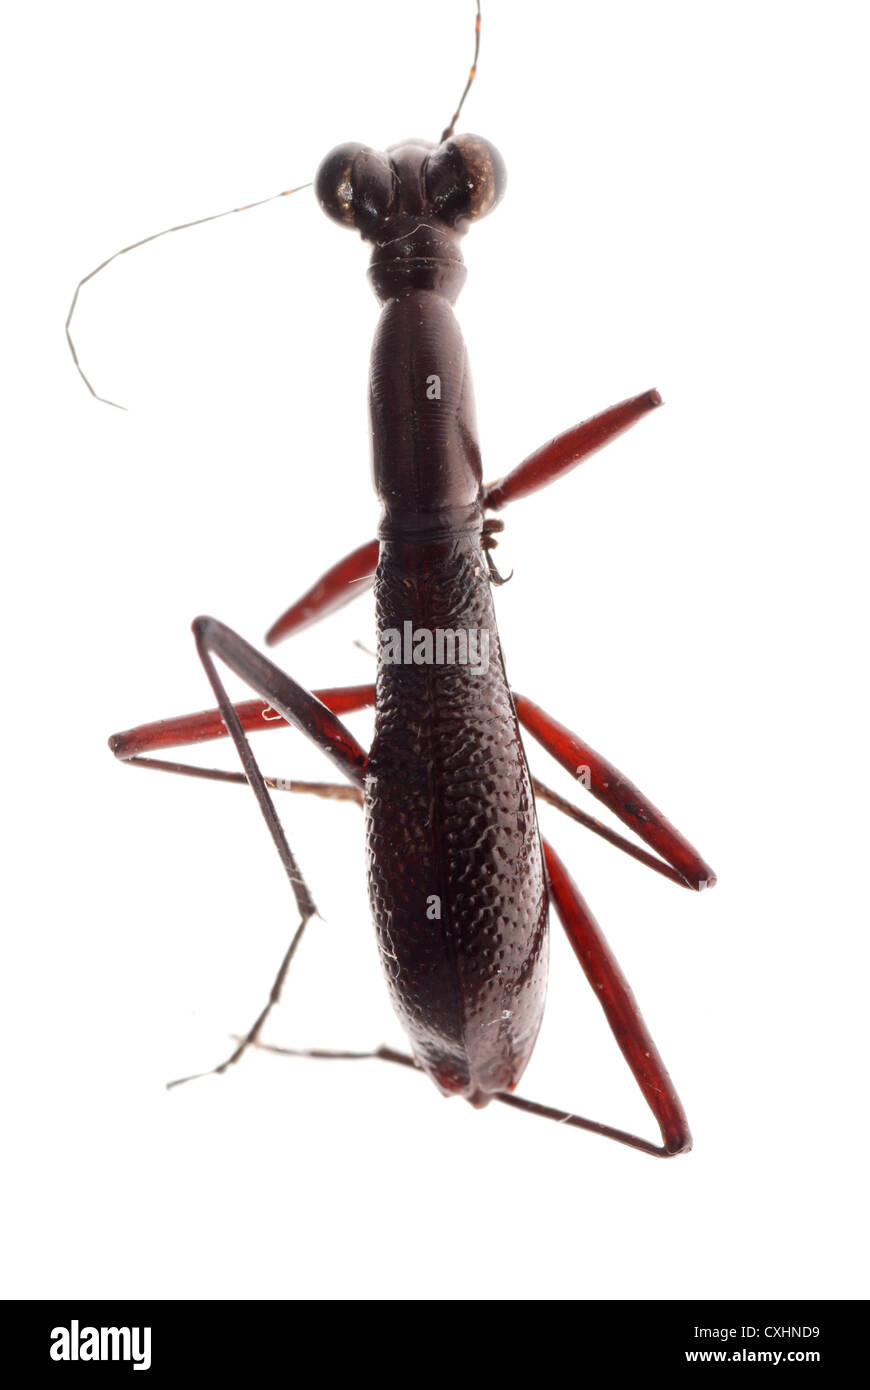 ant mimic beetle Stock Photo